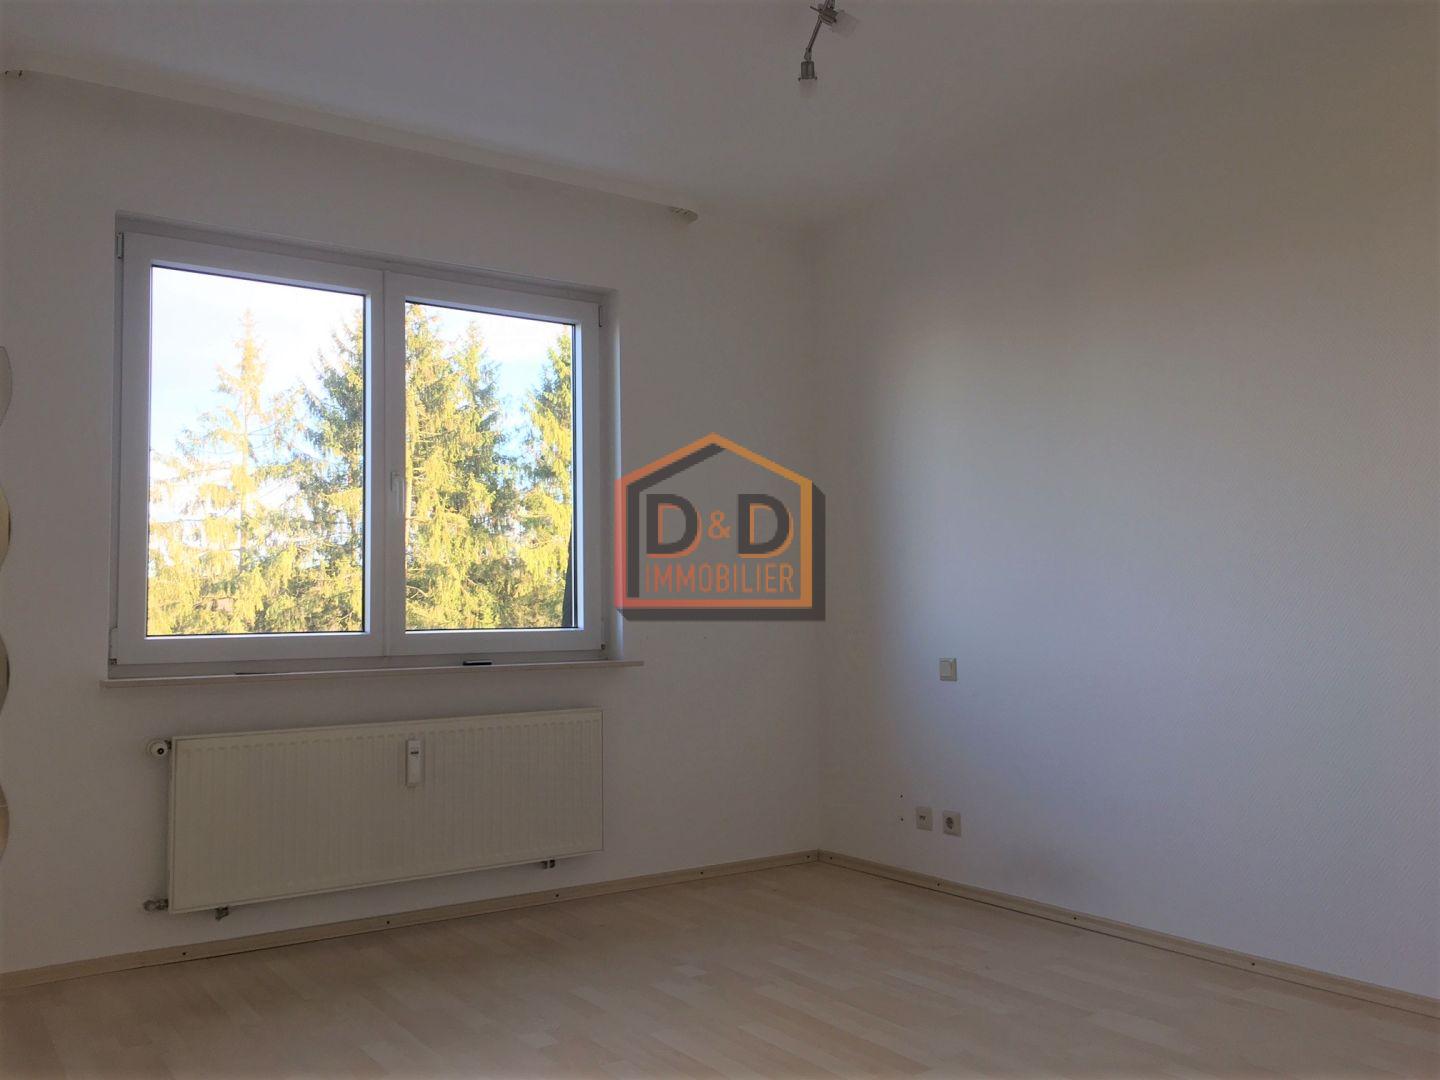 Appartement à Bascharage, 77 m², 2 chambres, 1 garage, 1 500 €/mois